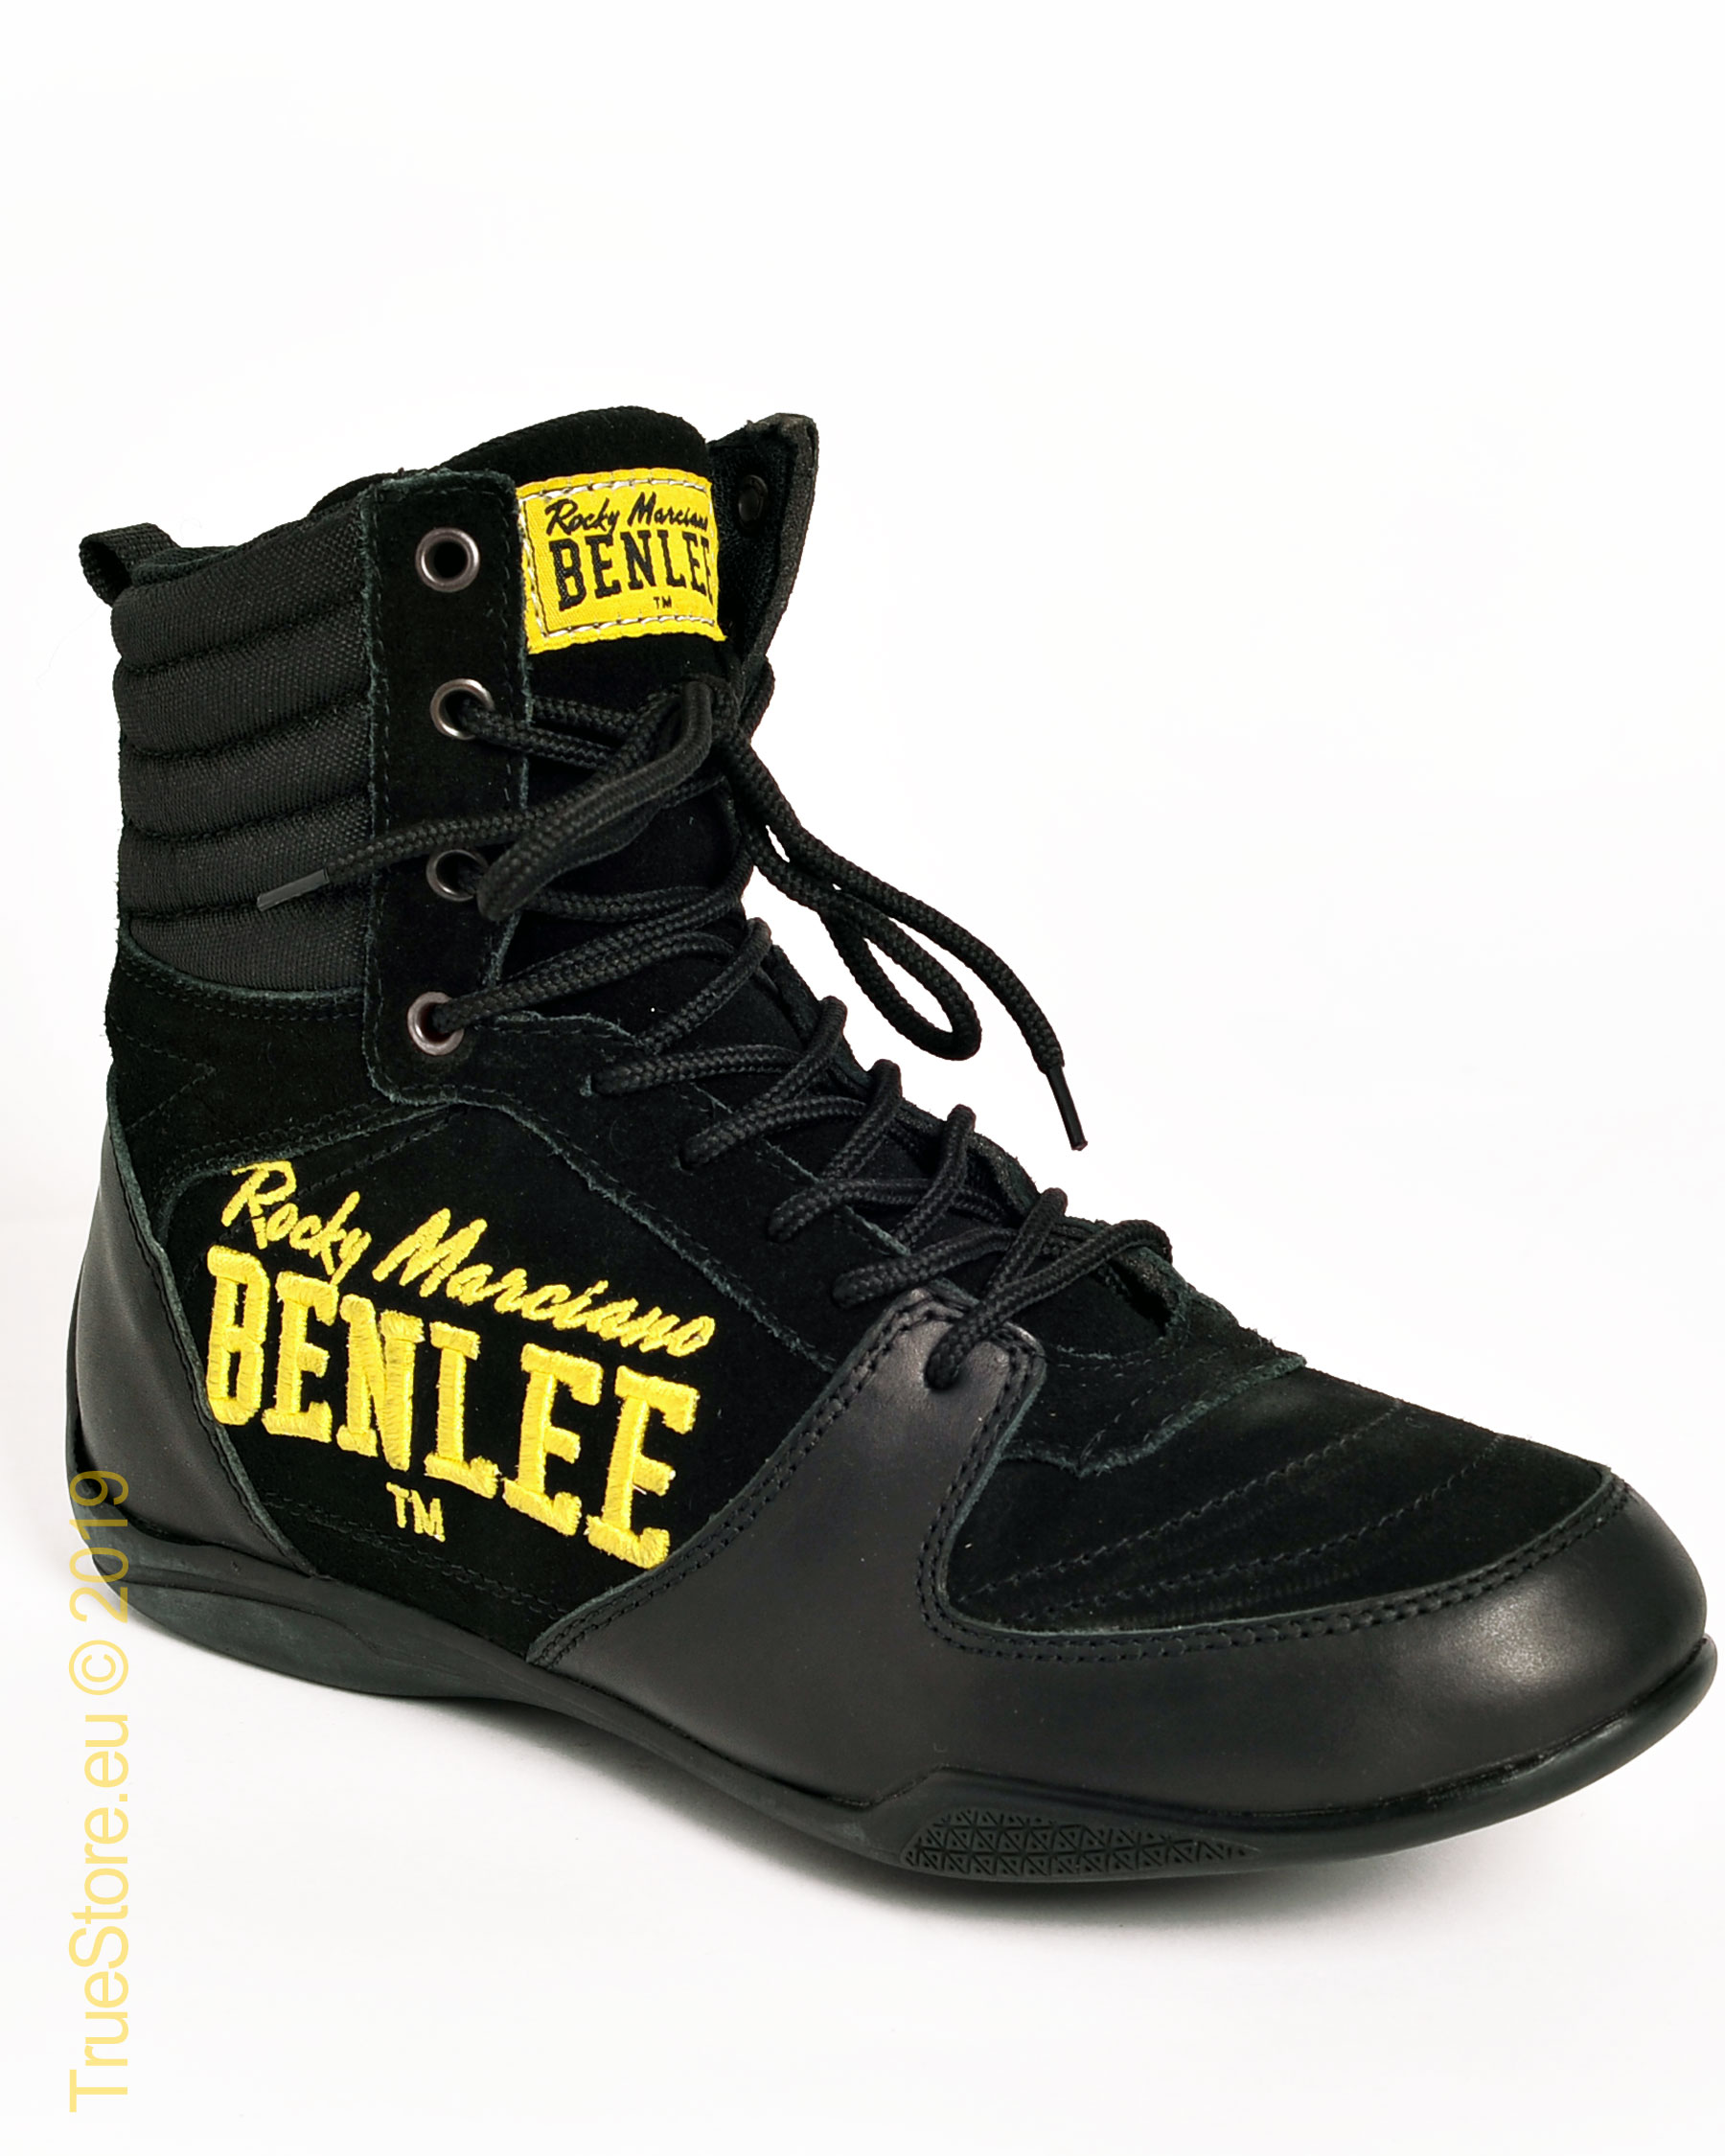 Benlee Men's Boxing Shoes Rexton 